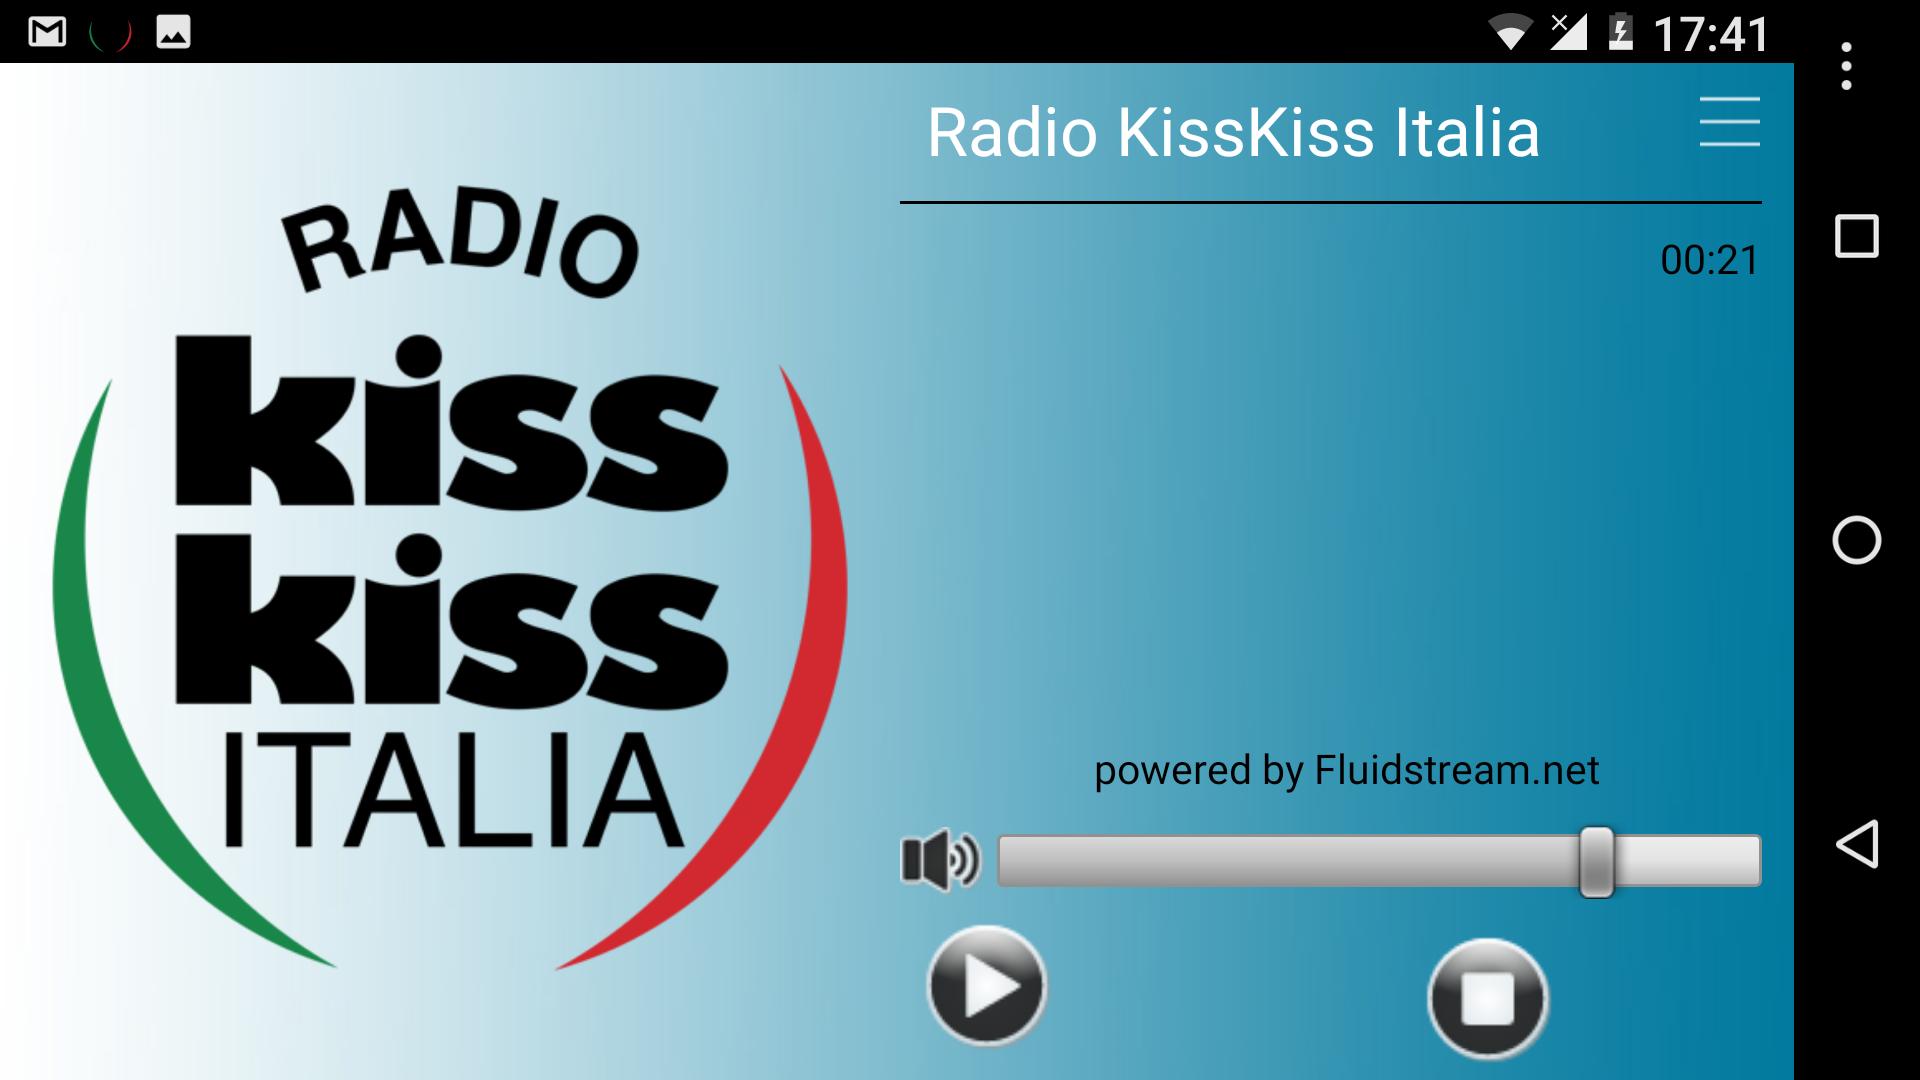 Radio Kiss Kiss Italia for Android - APK Download